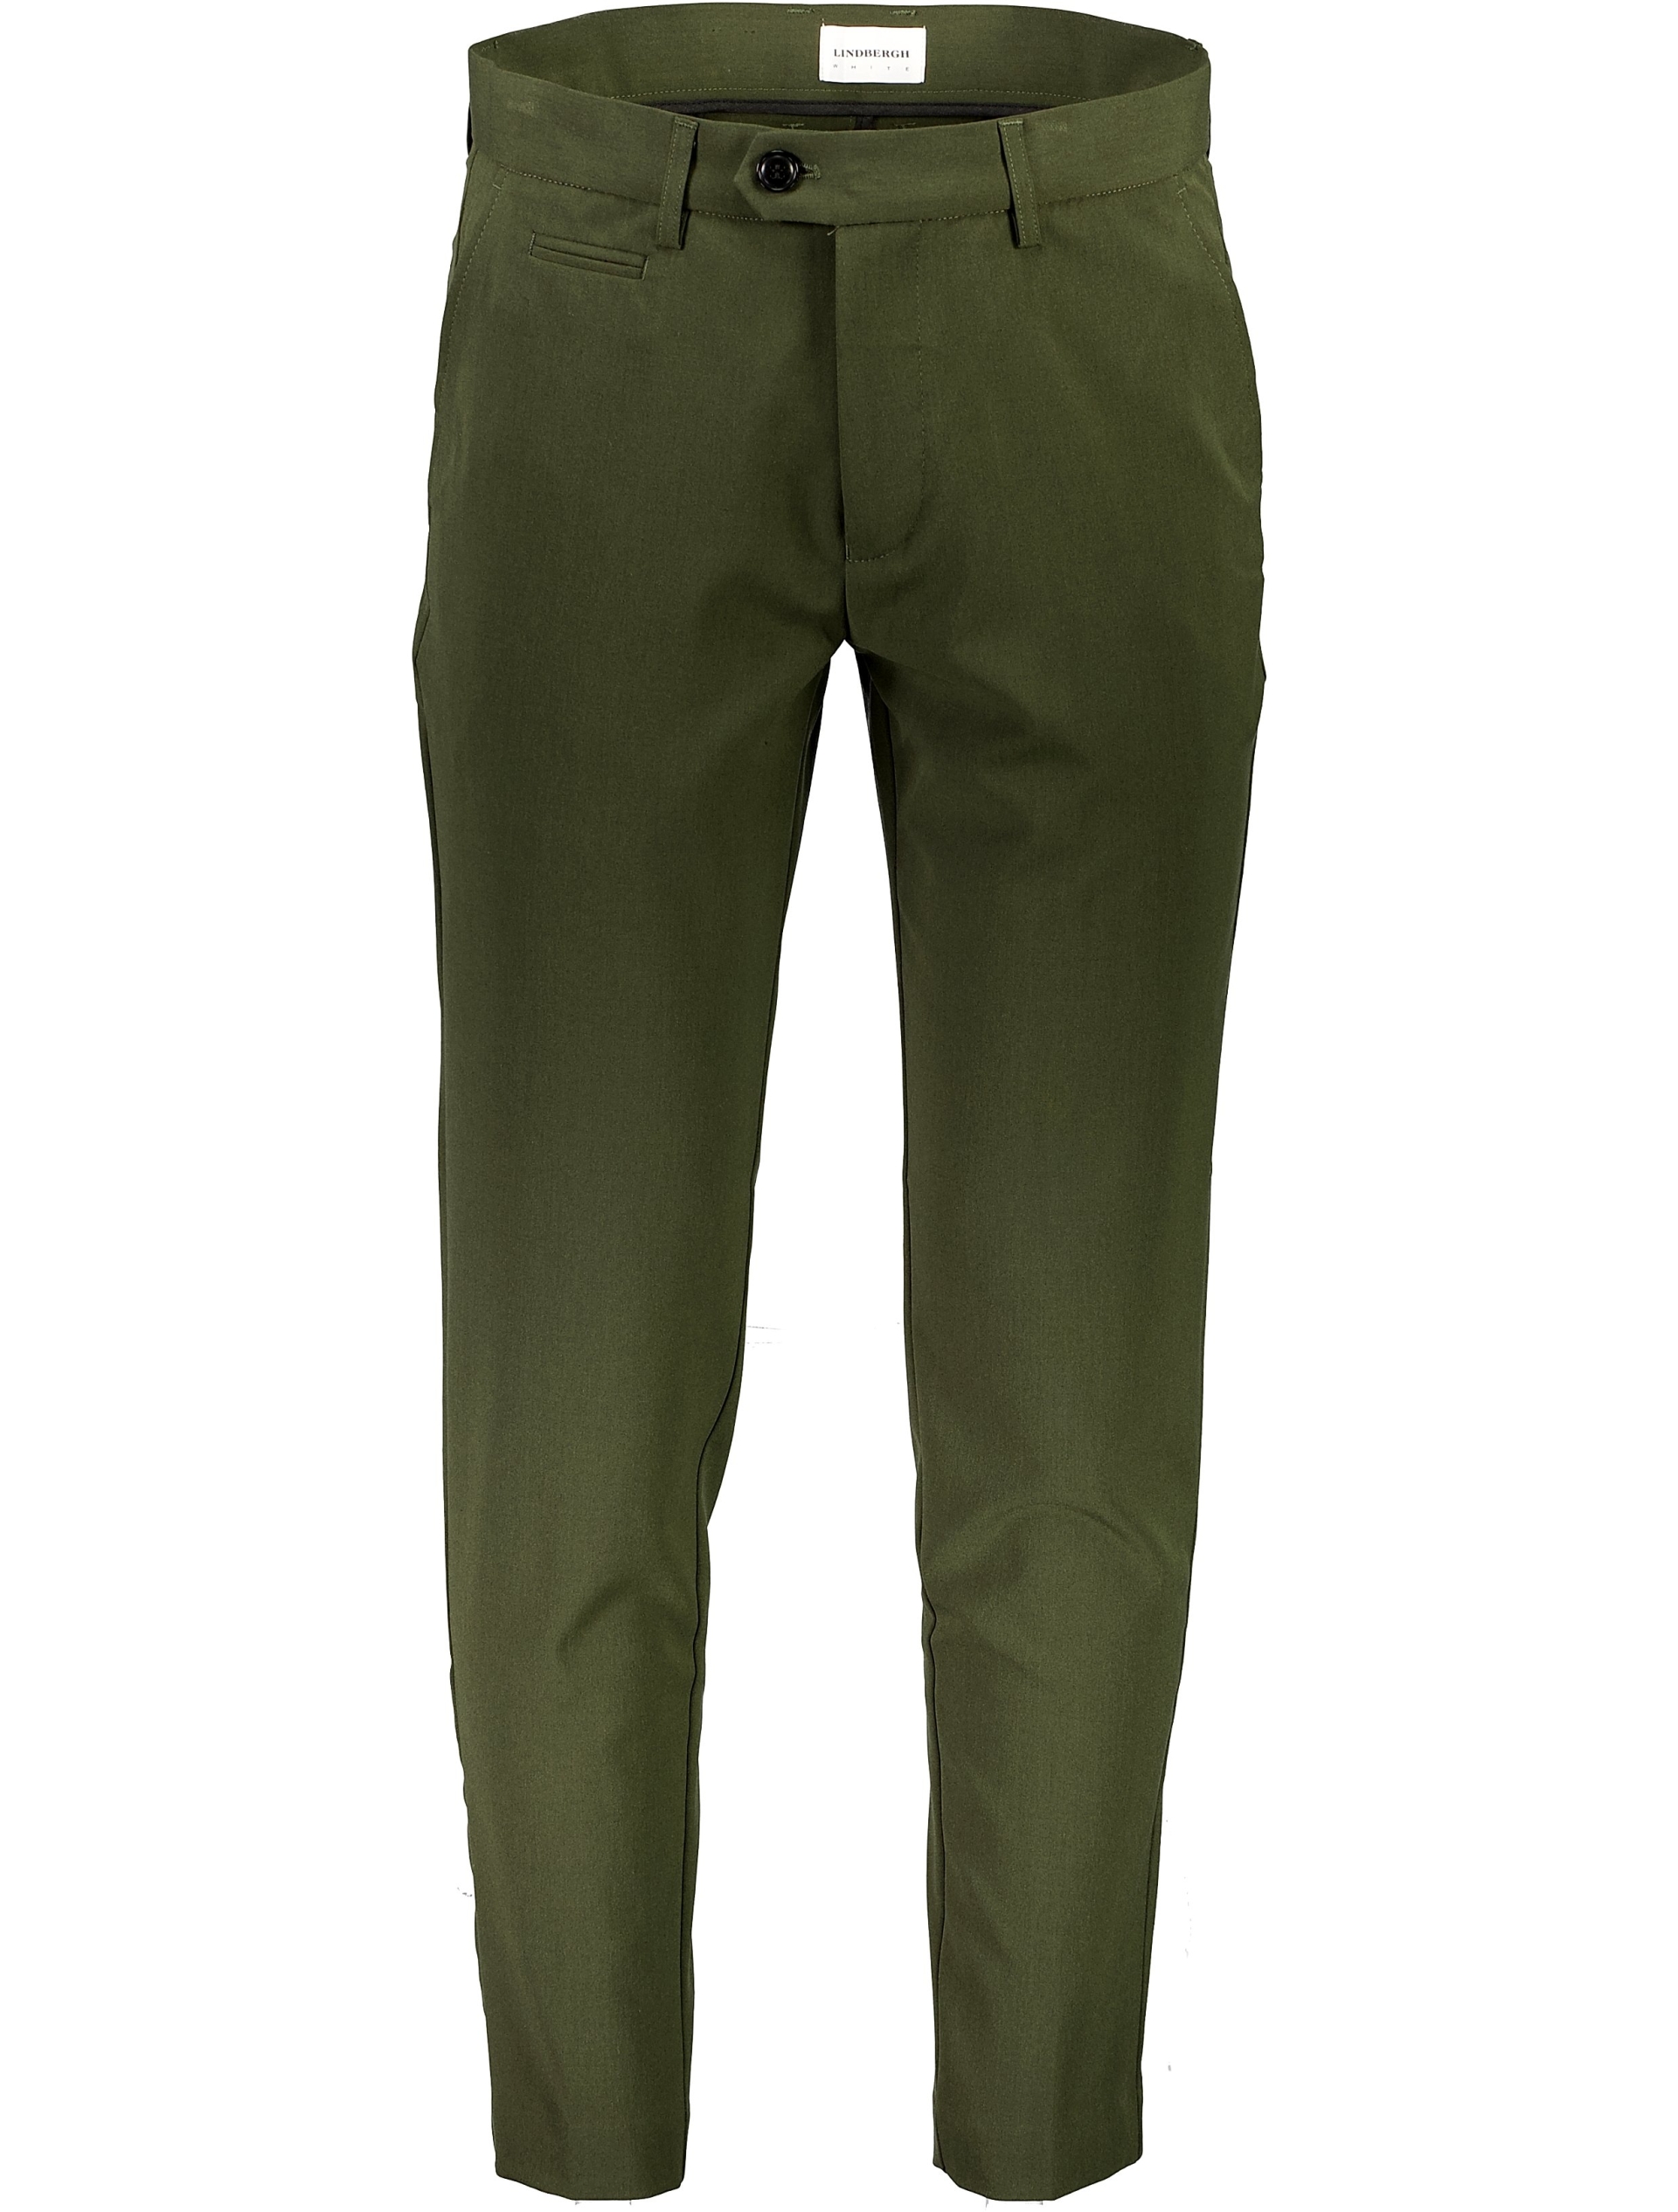 Lindbergh Performance pants green / wood green